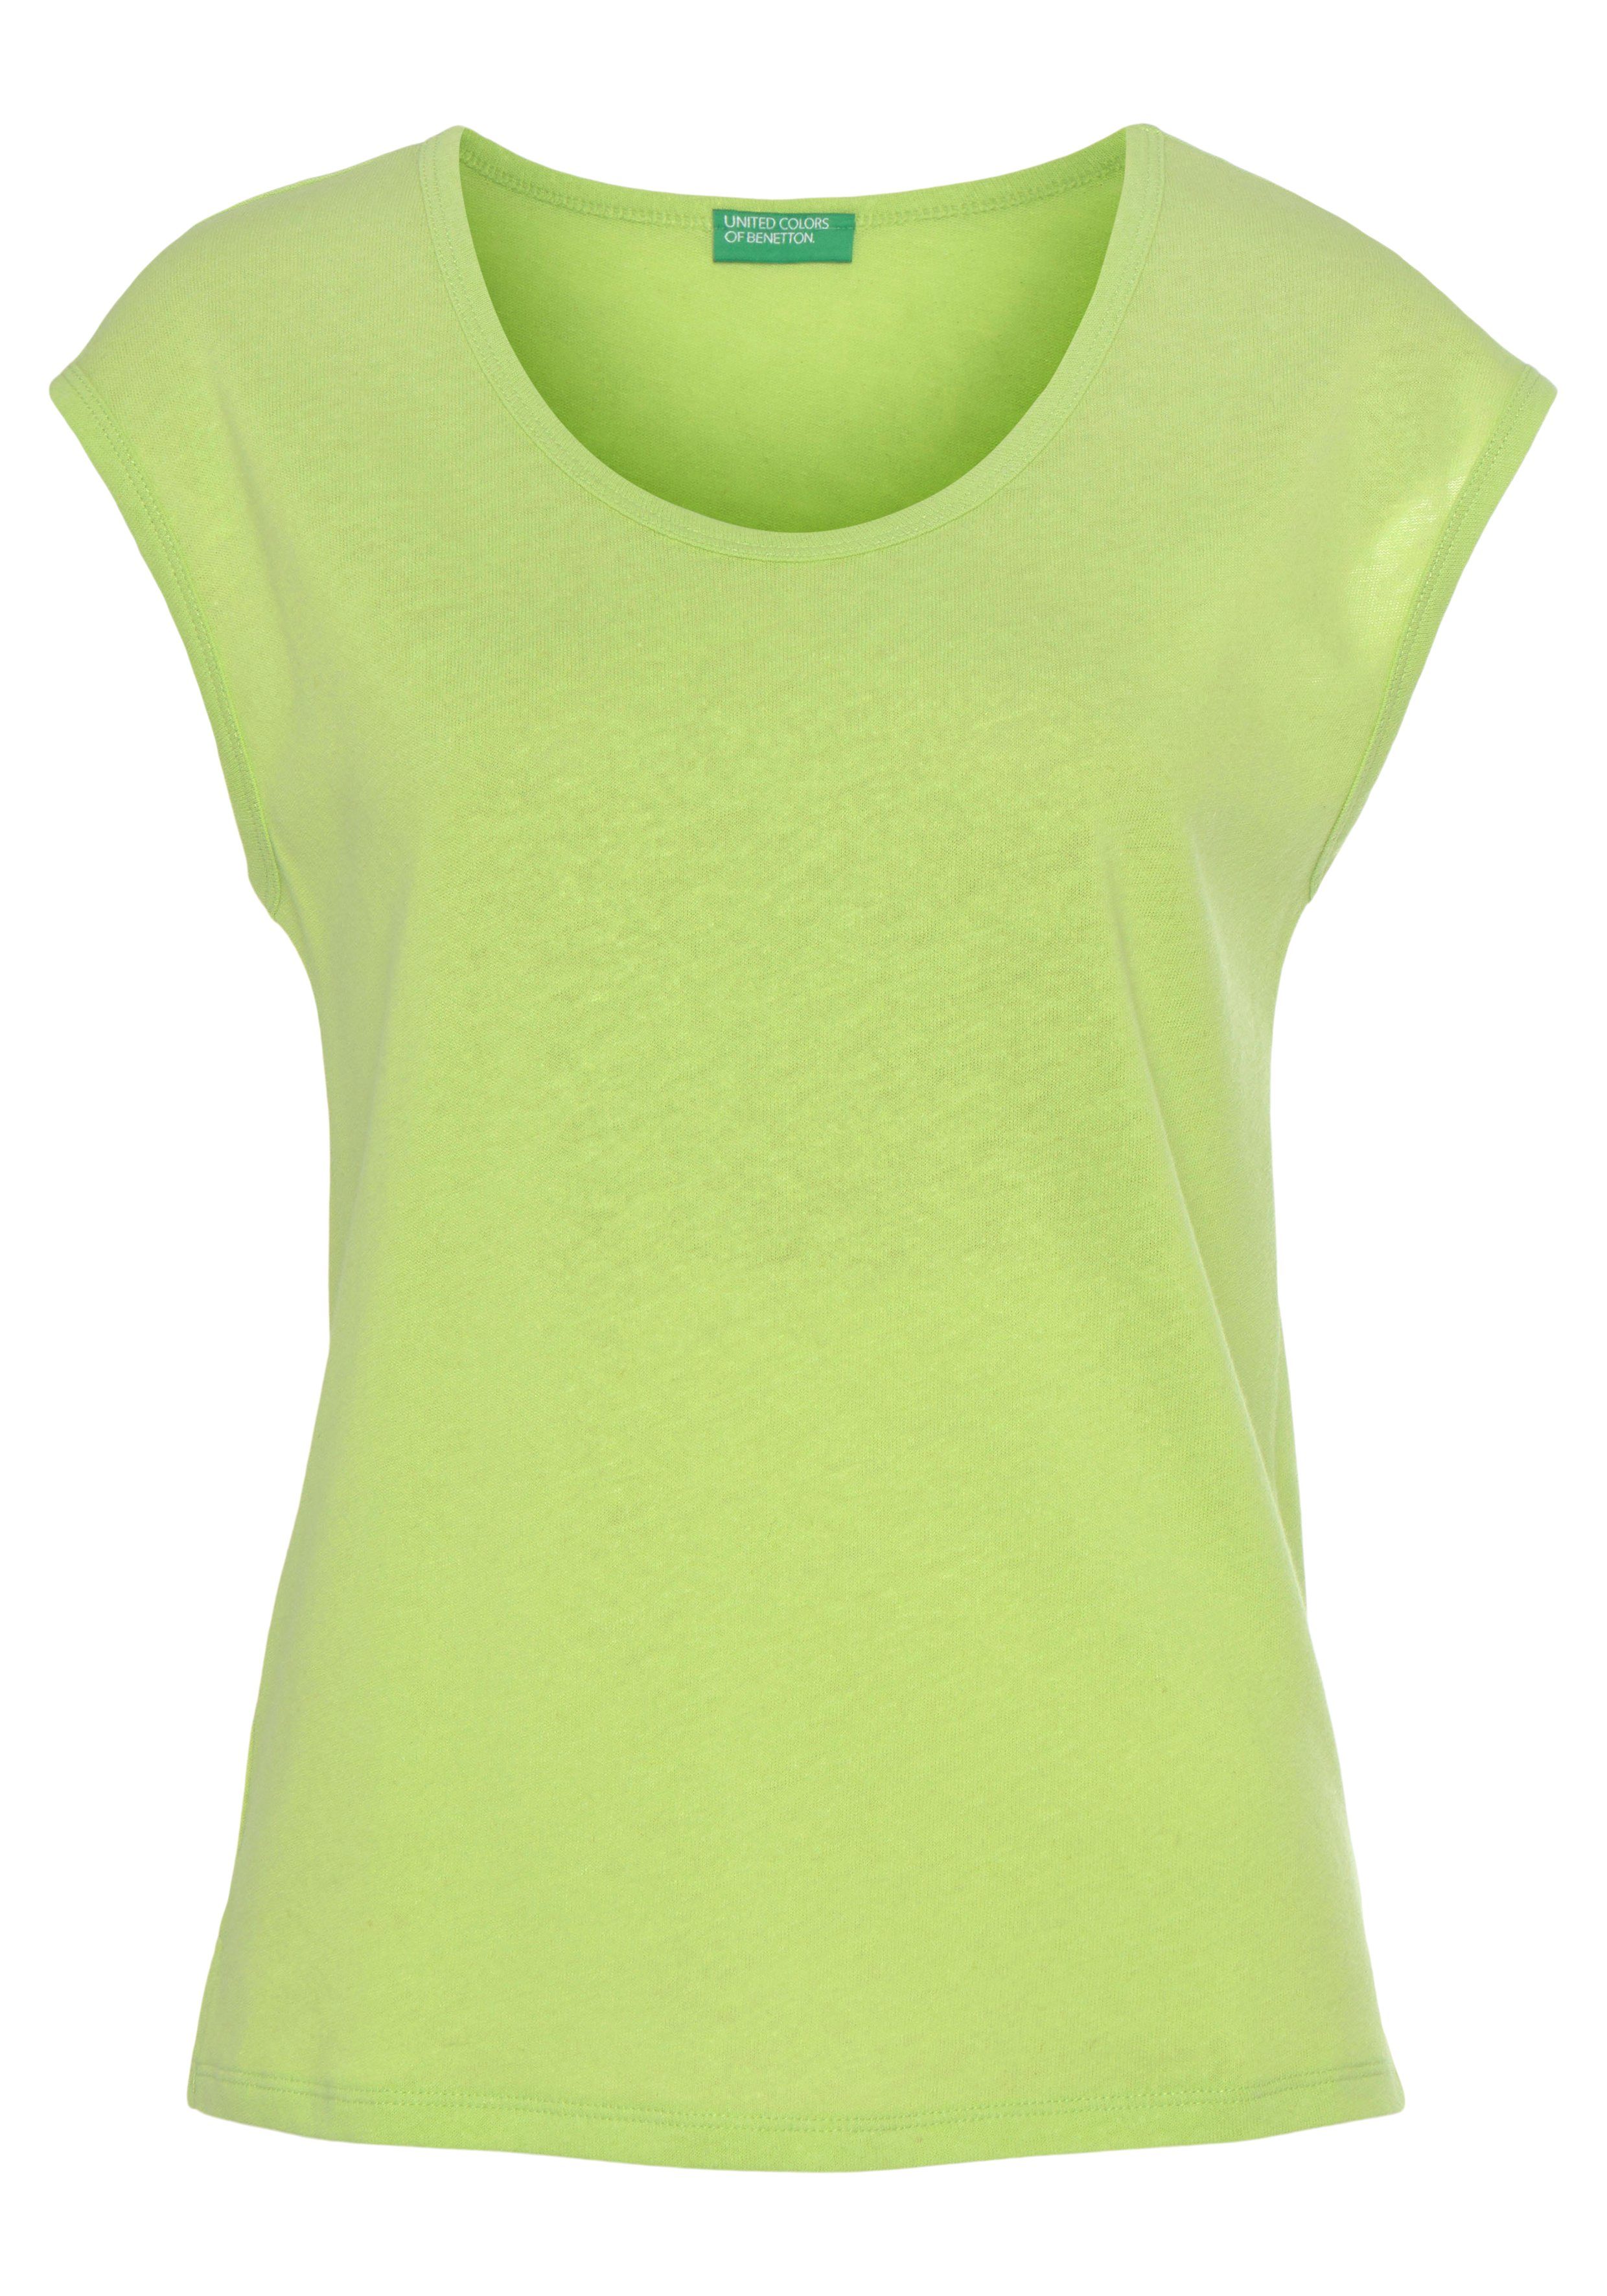 United Colors of Benetton grün T-Shirt Rundhalsausschnitt mit